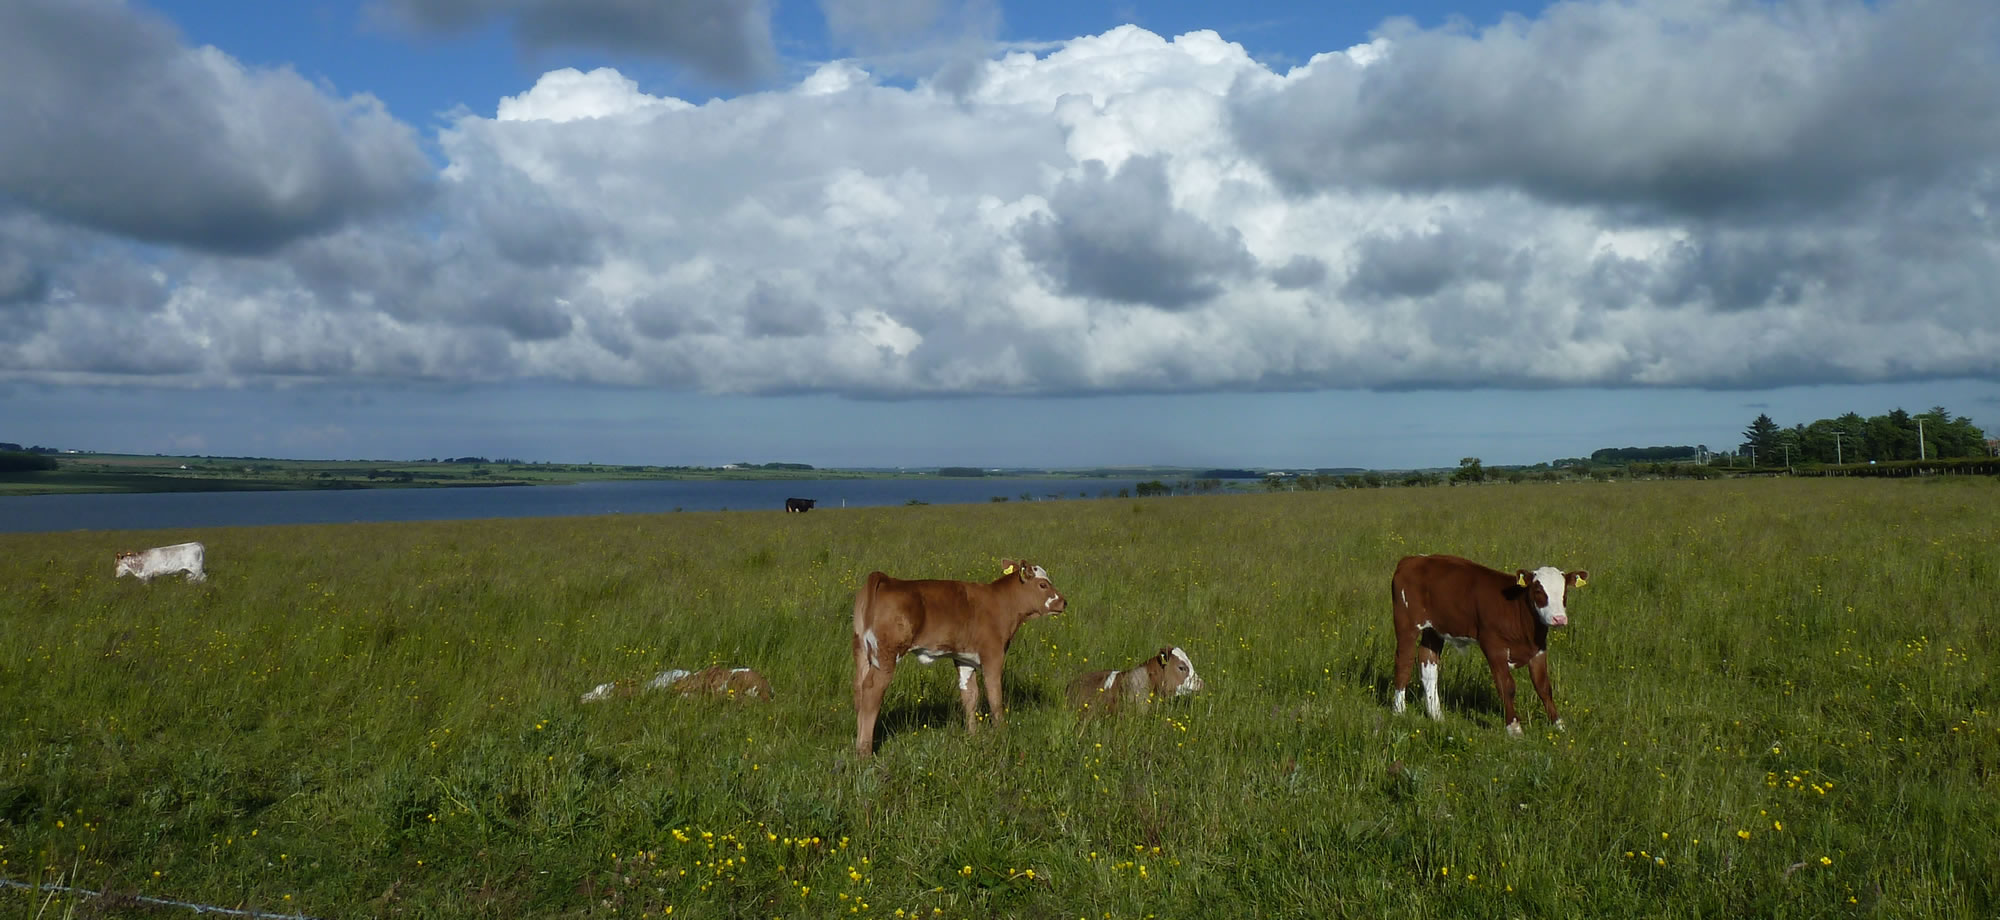 Picture of Loch Watten next to our croft. Cattle on the grass fields next to Loch Watten, Caithness.